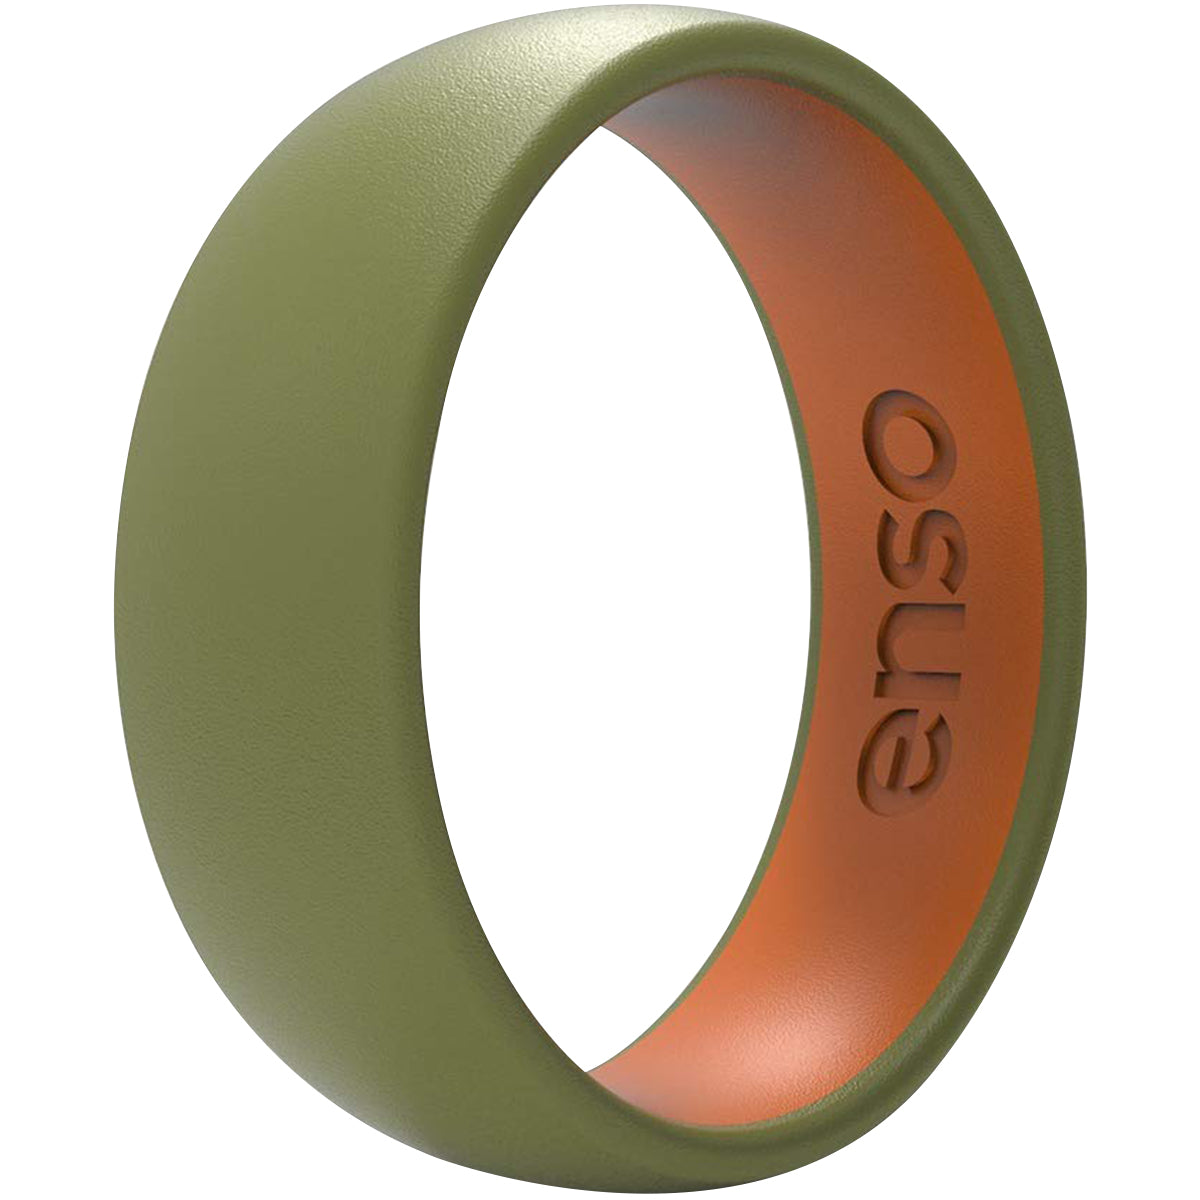 Enso Rings Dualtone Series Silicone Ring - Olive/Burnt Orange Enso Rings